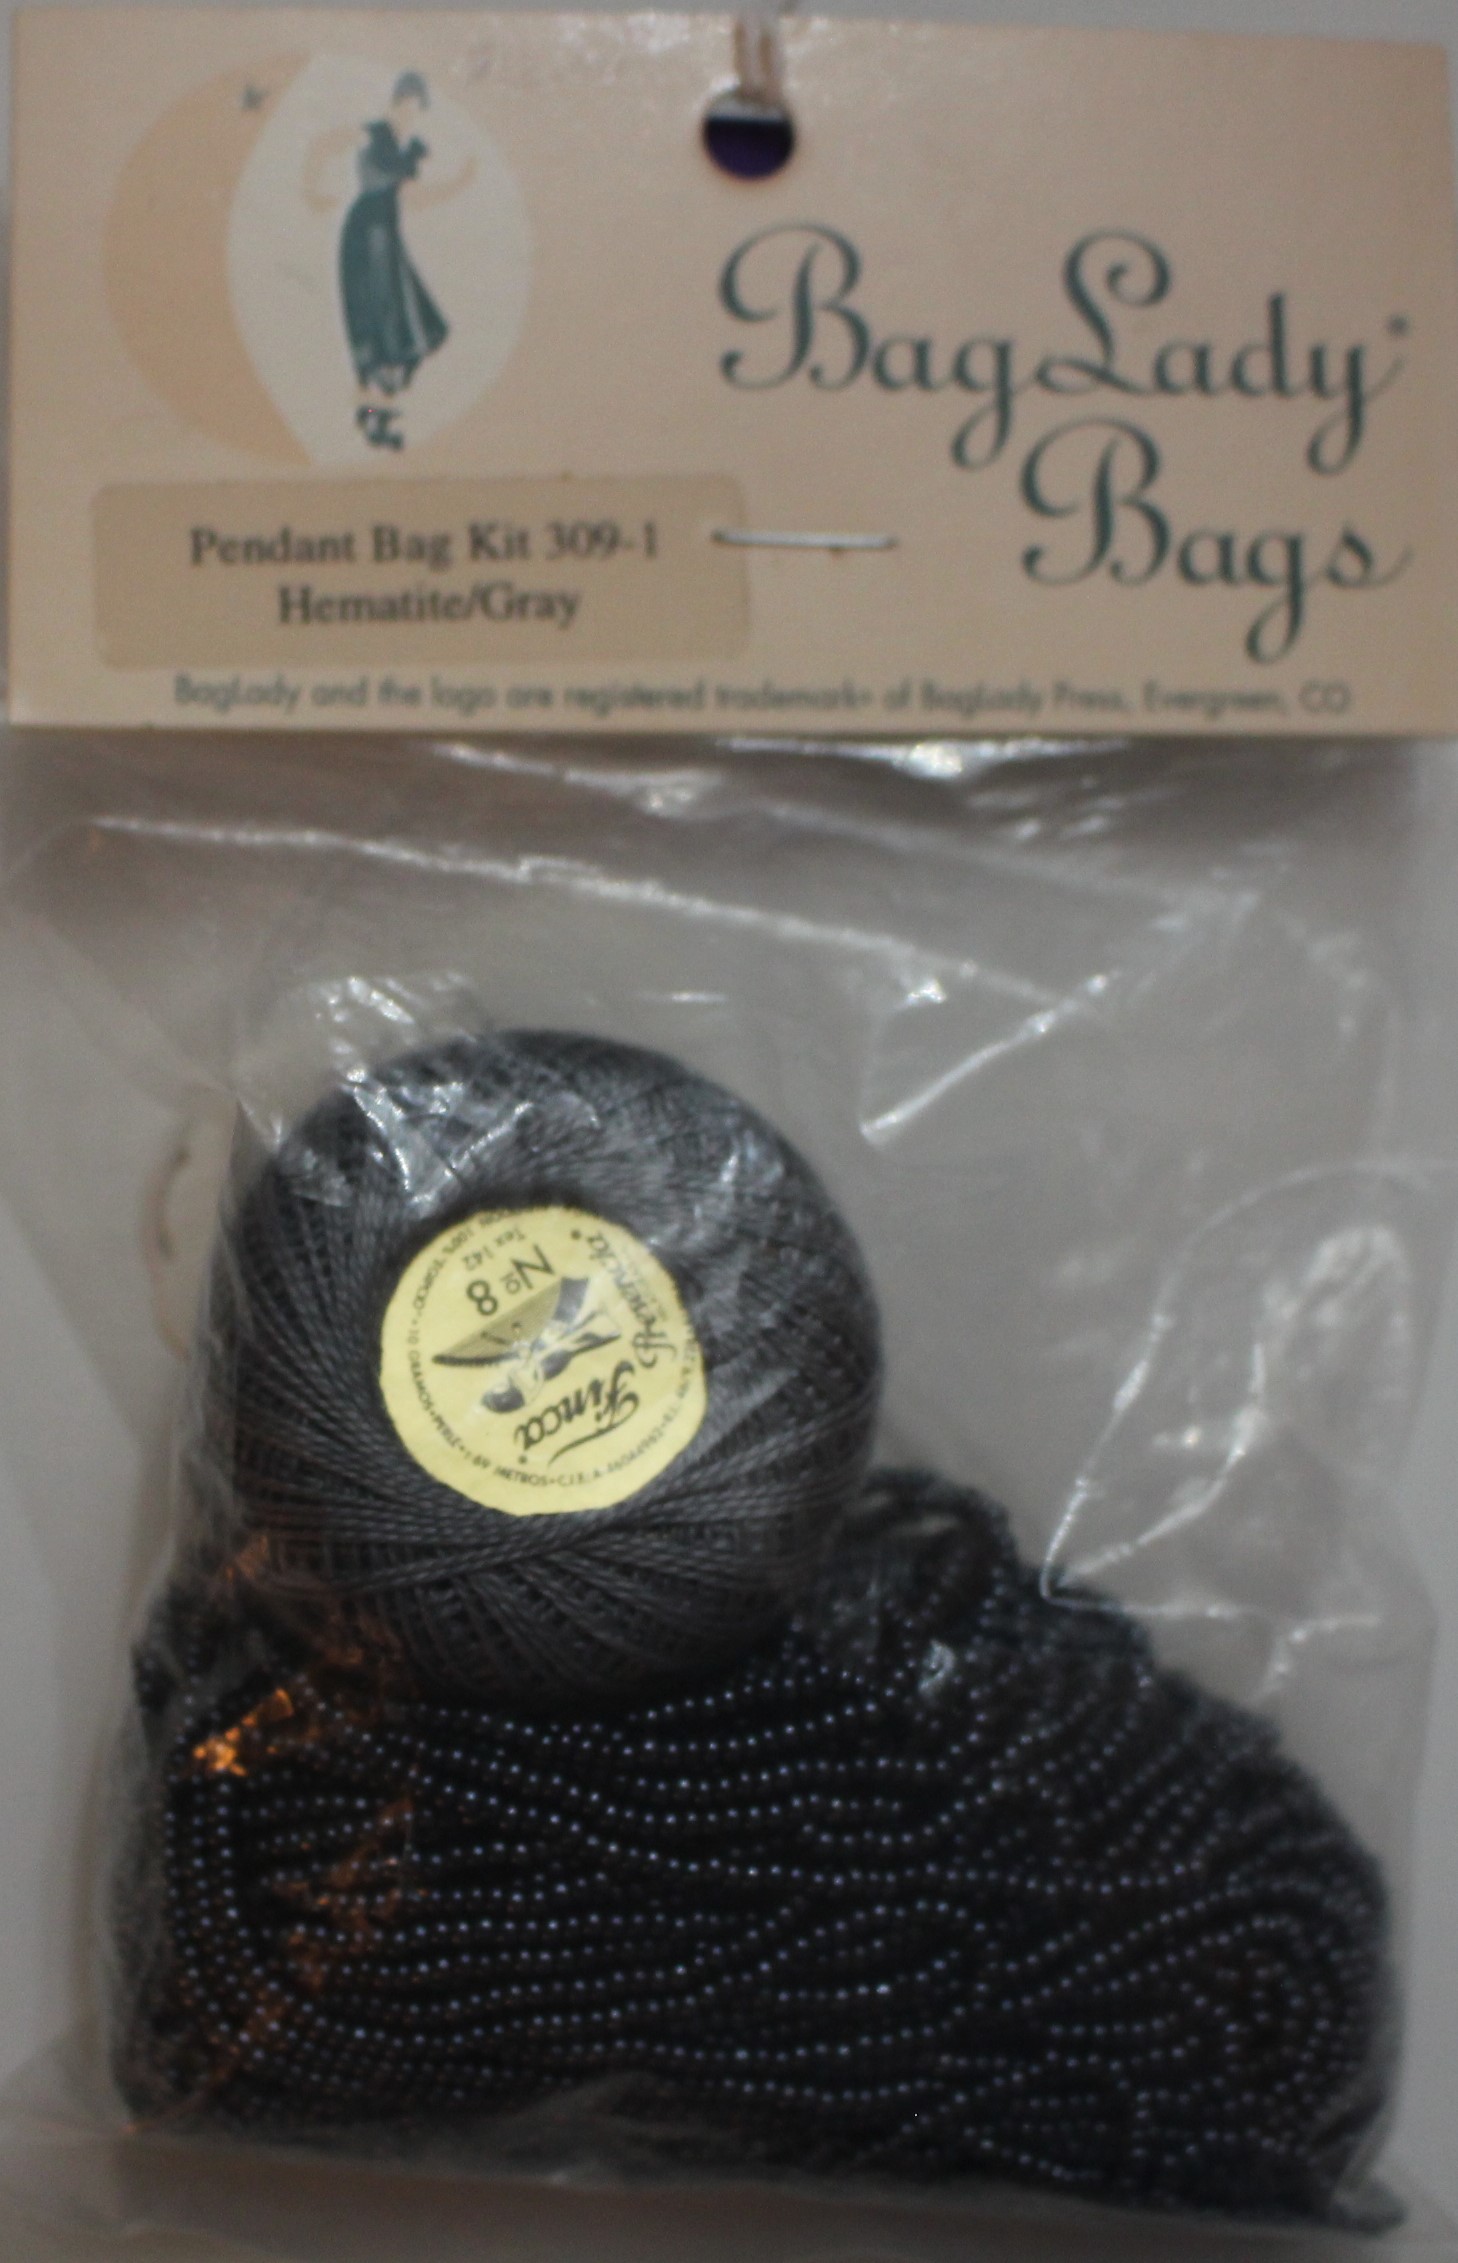 Bag Lady Bags Pendant Bag Kit 309-1 Hematite/Gray